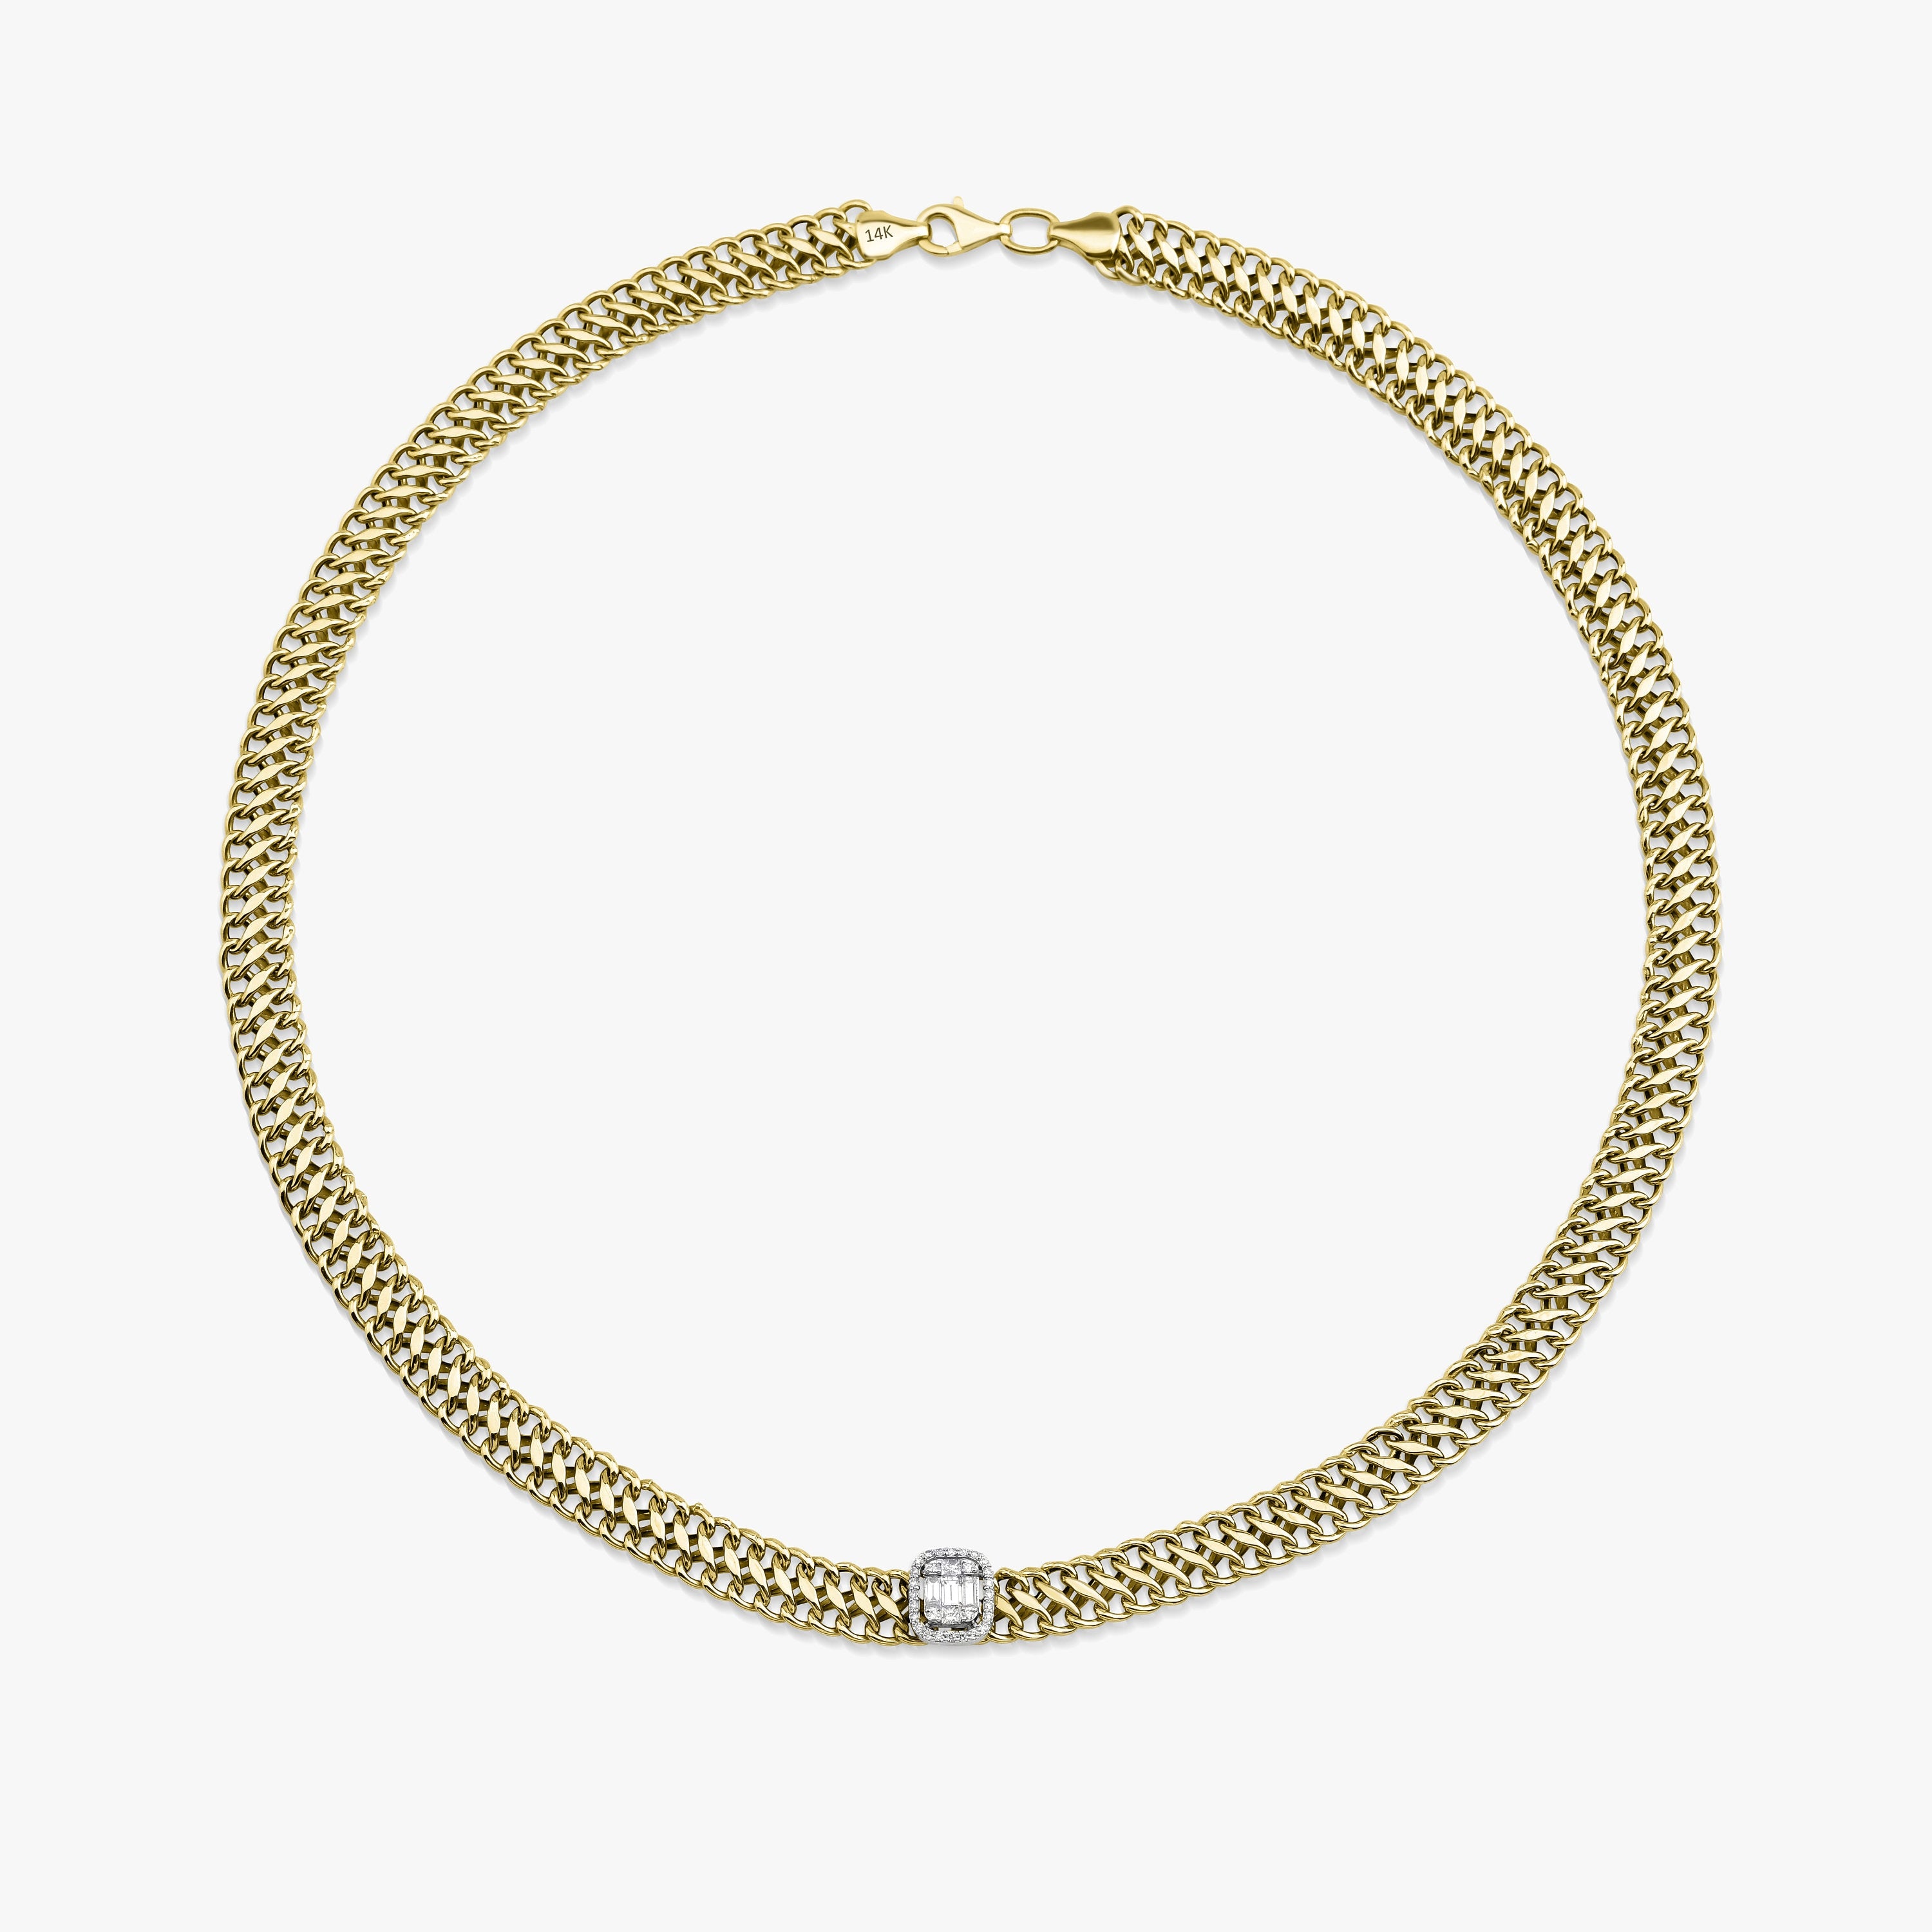 Diamond Choker Necklace in 14K Gold